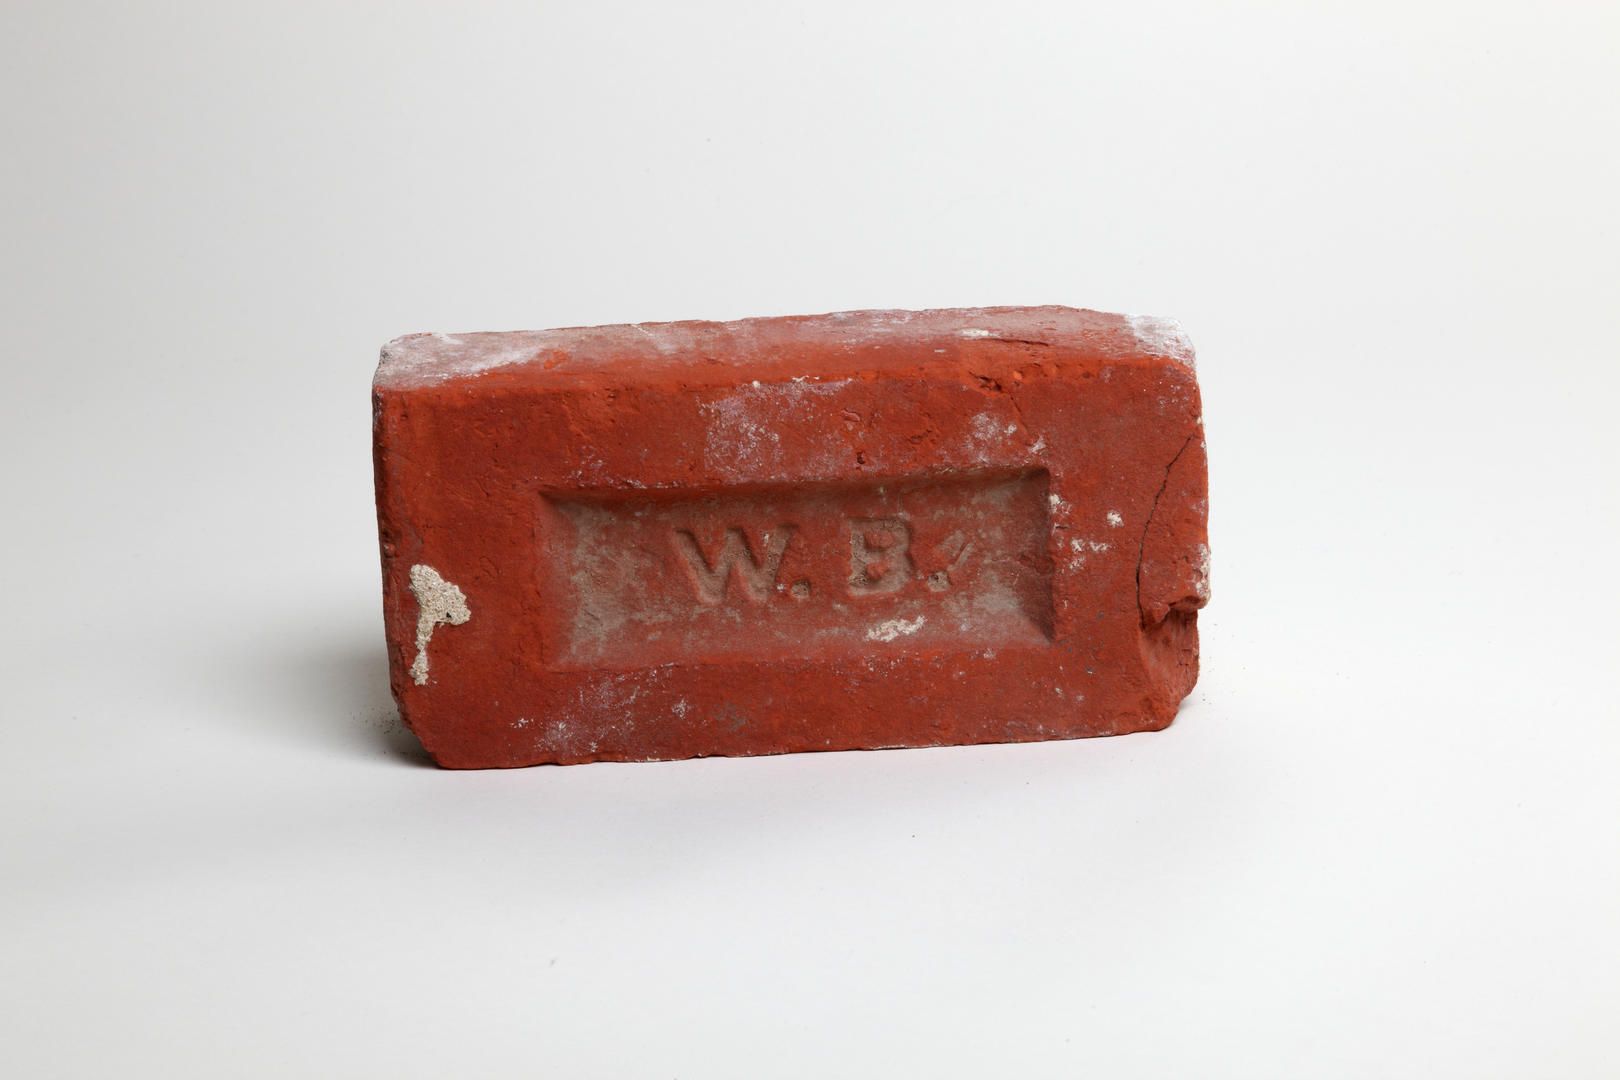 Salvation Army brick